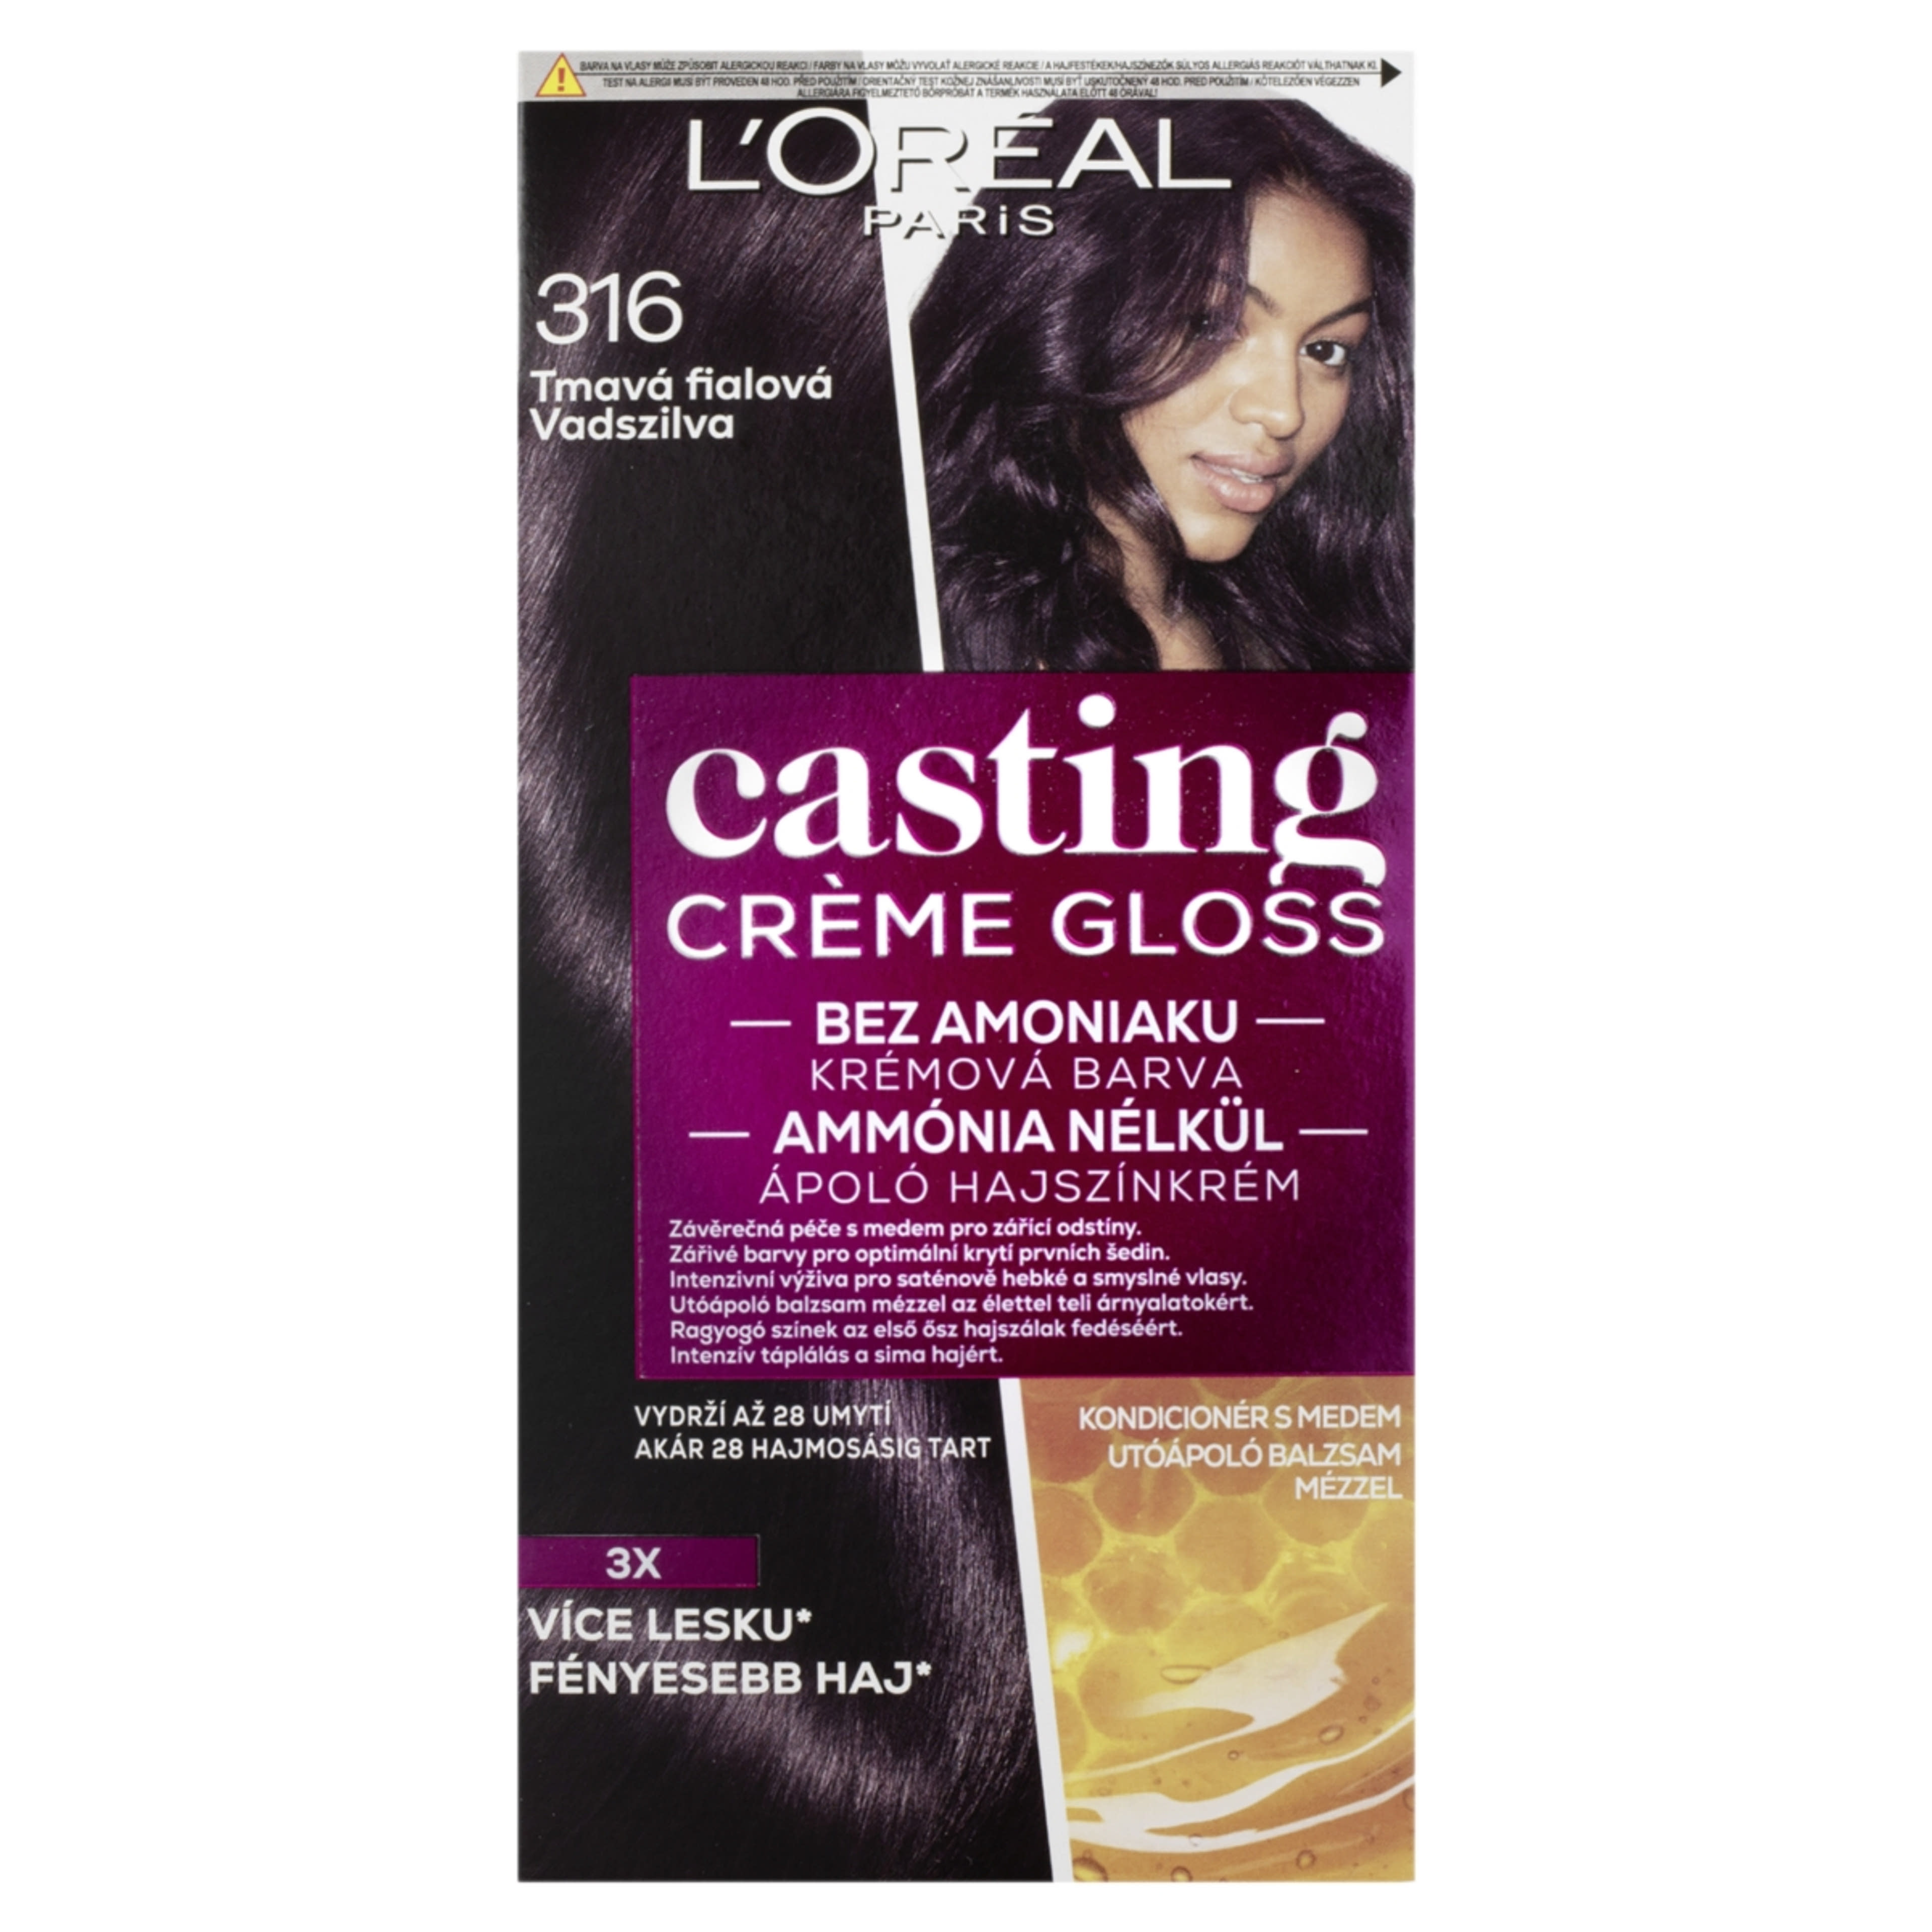 L'Oréal Paris Casting Creme Gloss Hajszínező krém 316 Vadszilva - 1 db-1